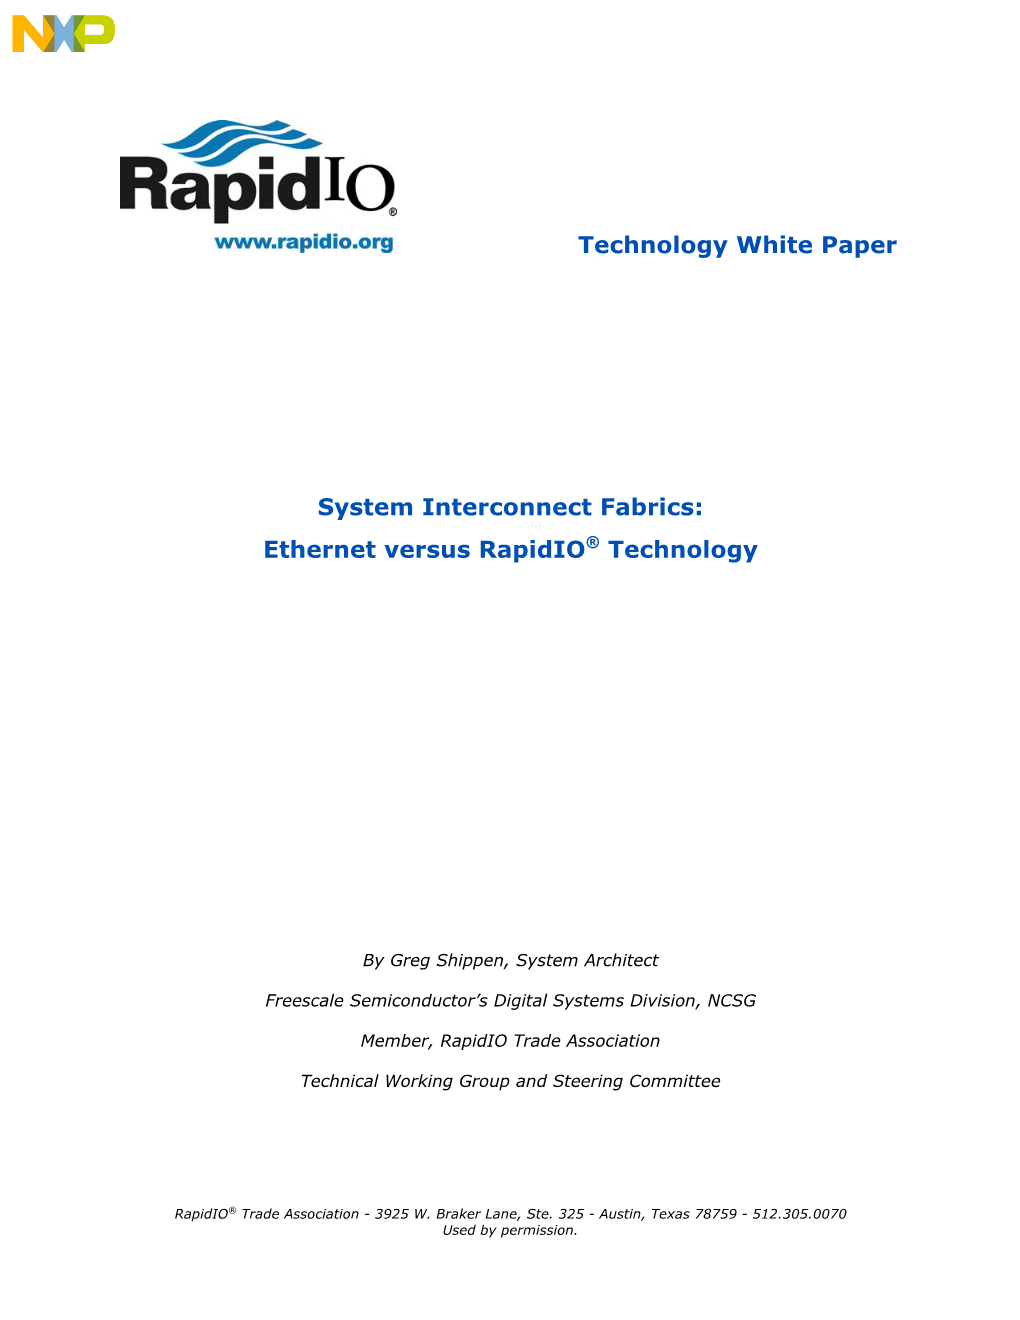 System Interconnect Fabrics: Ethernet Versus Rapidio® Technology